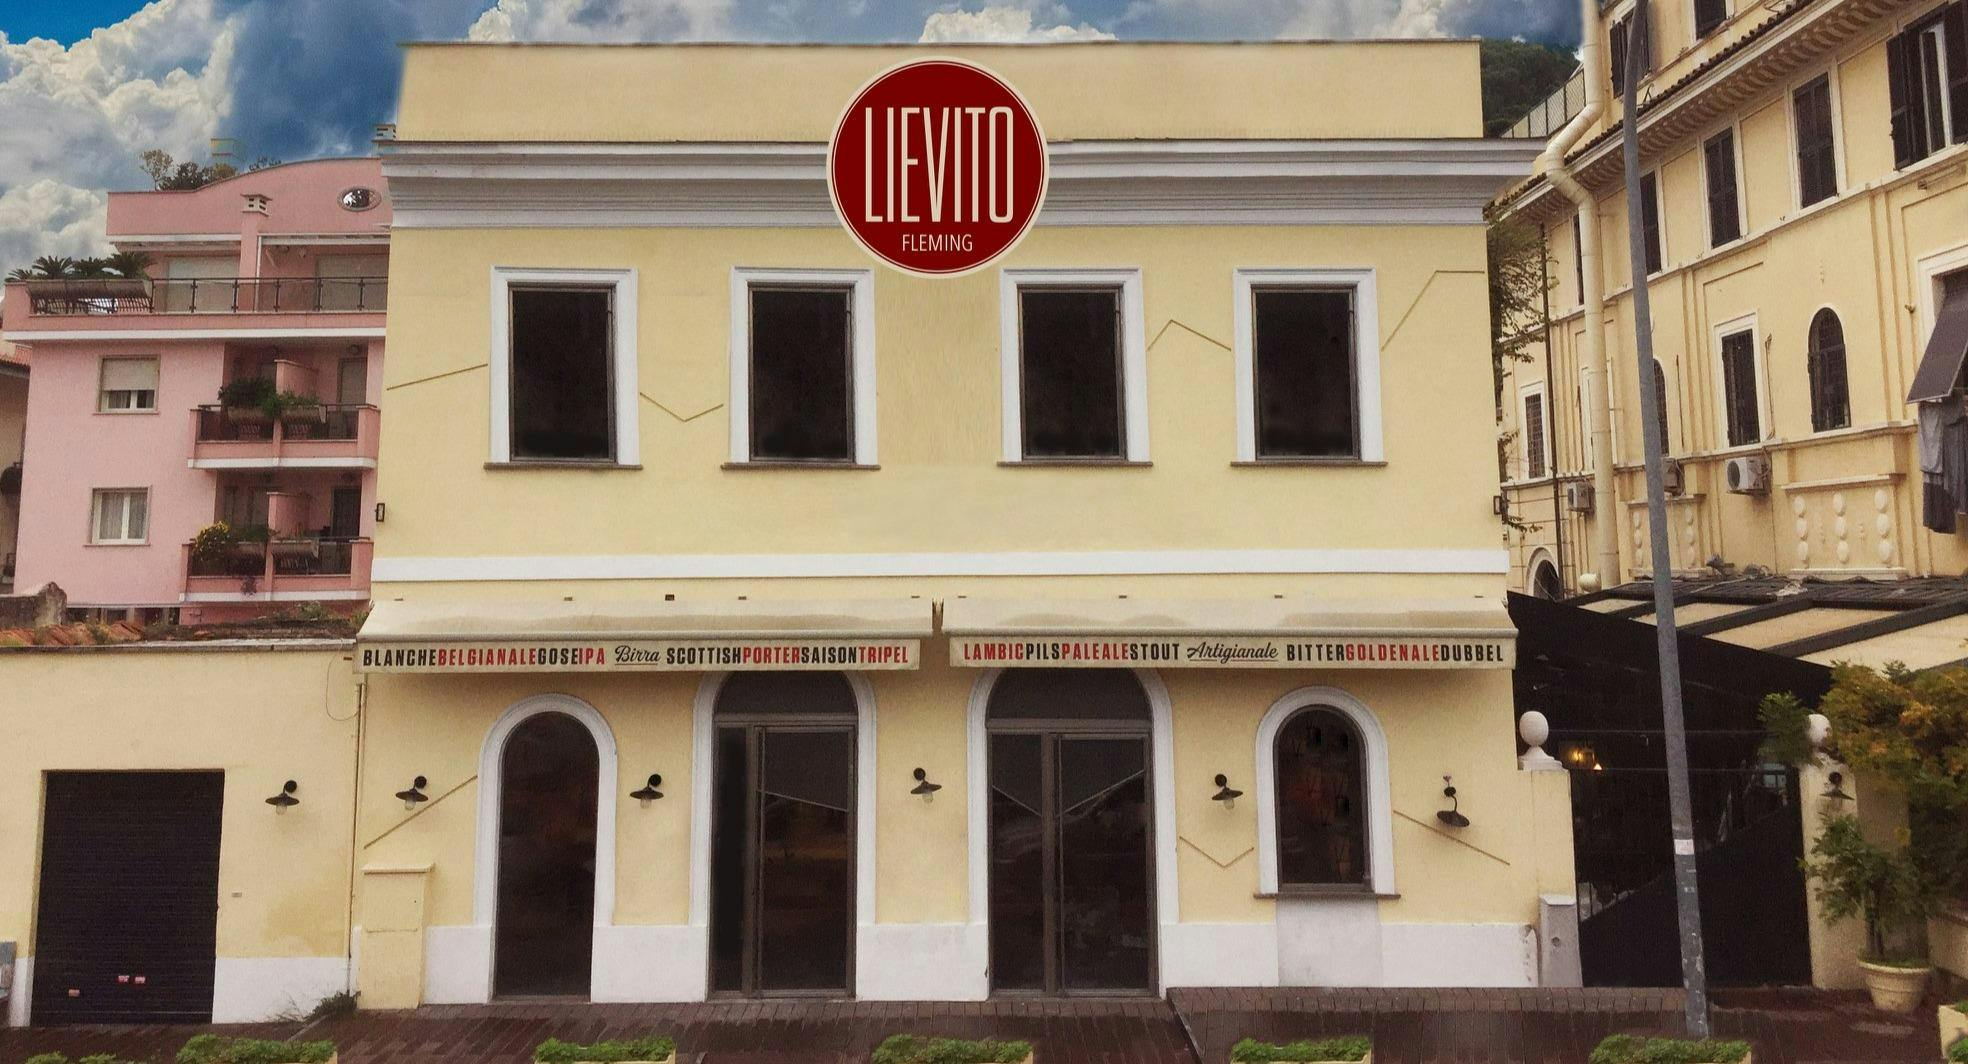 Photo of restaurant Lievito - Chiana in Salario, Rome